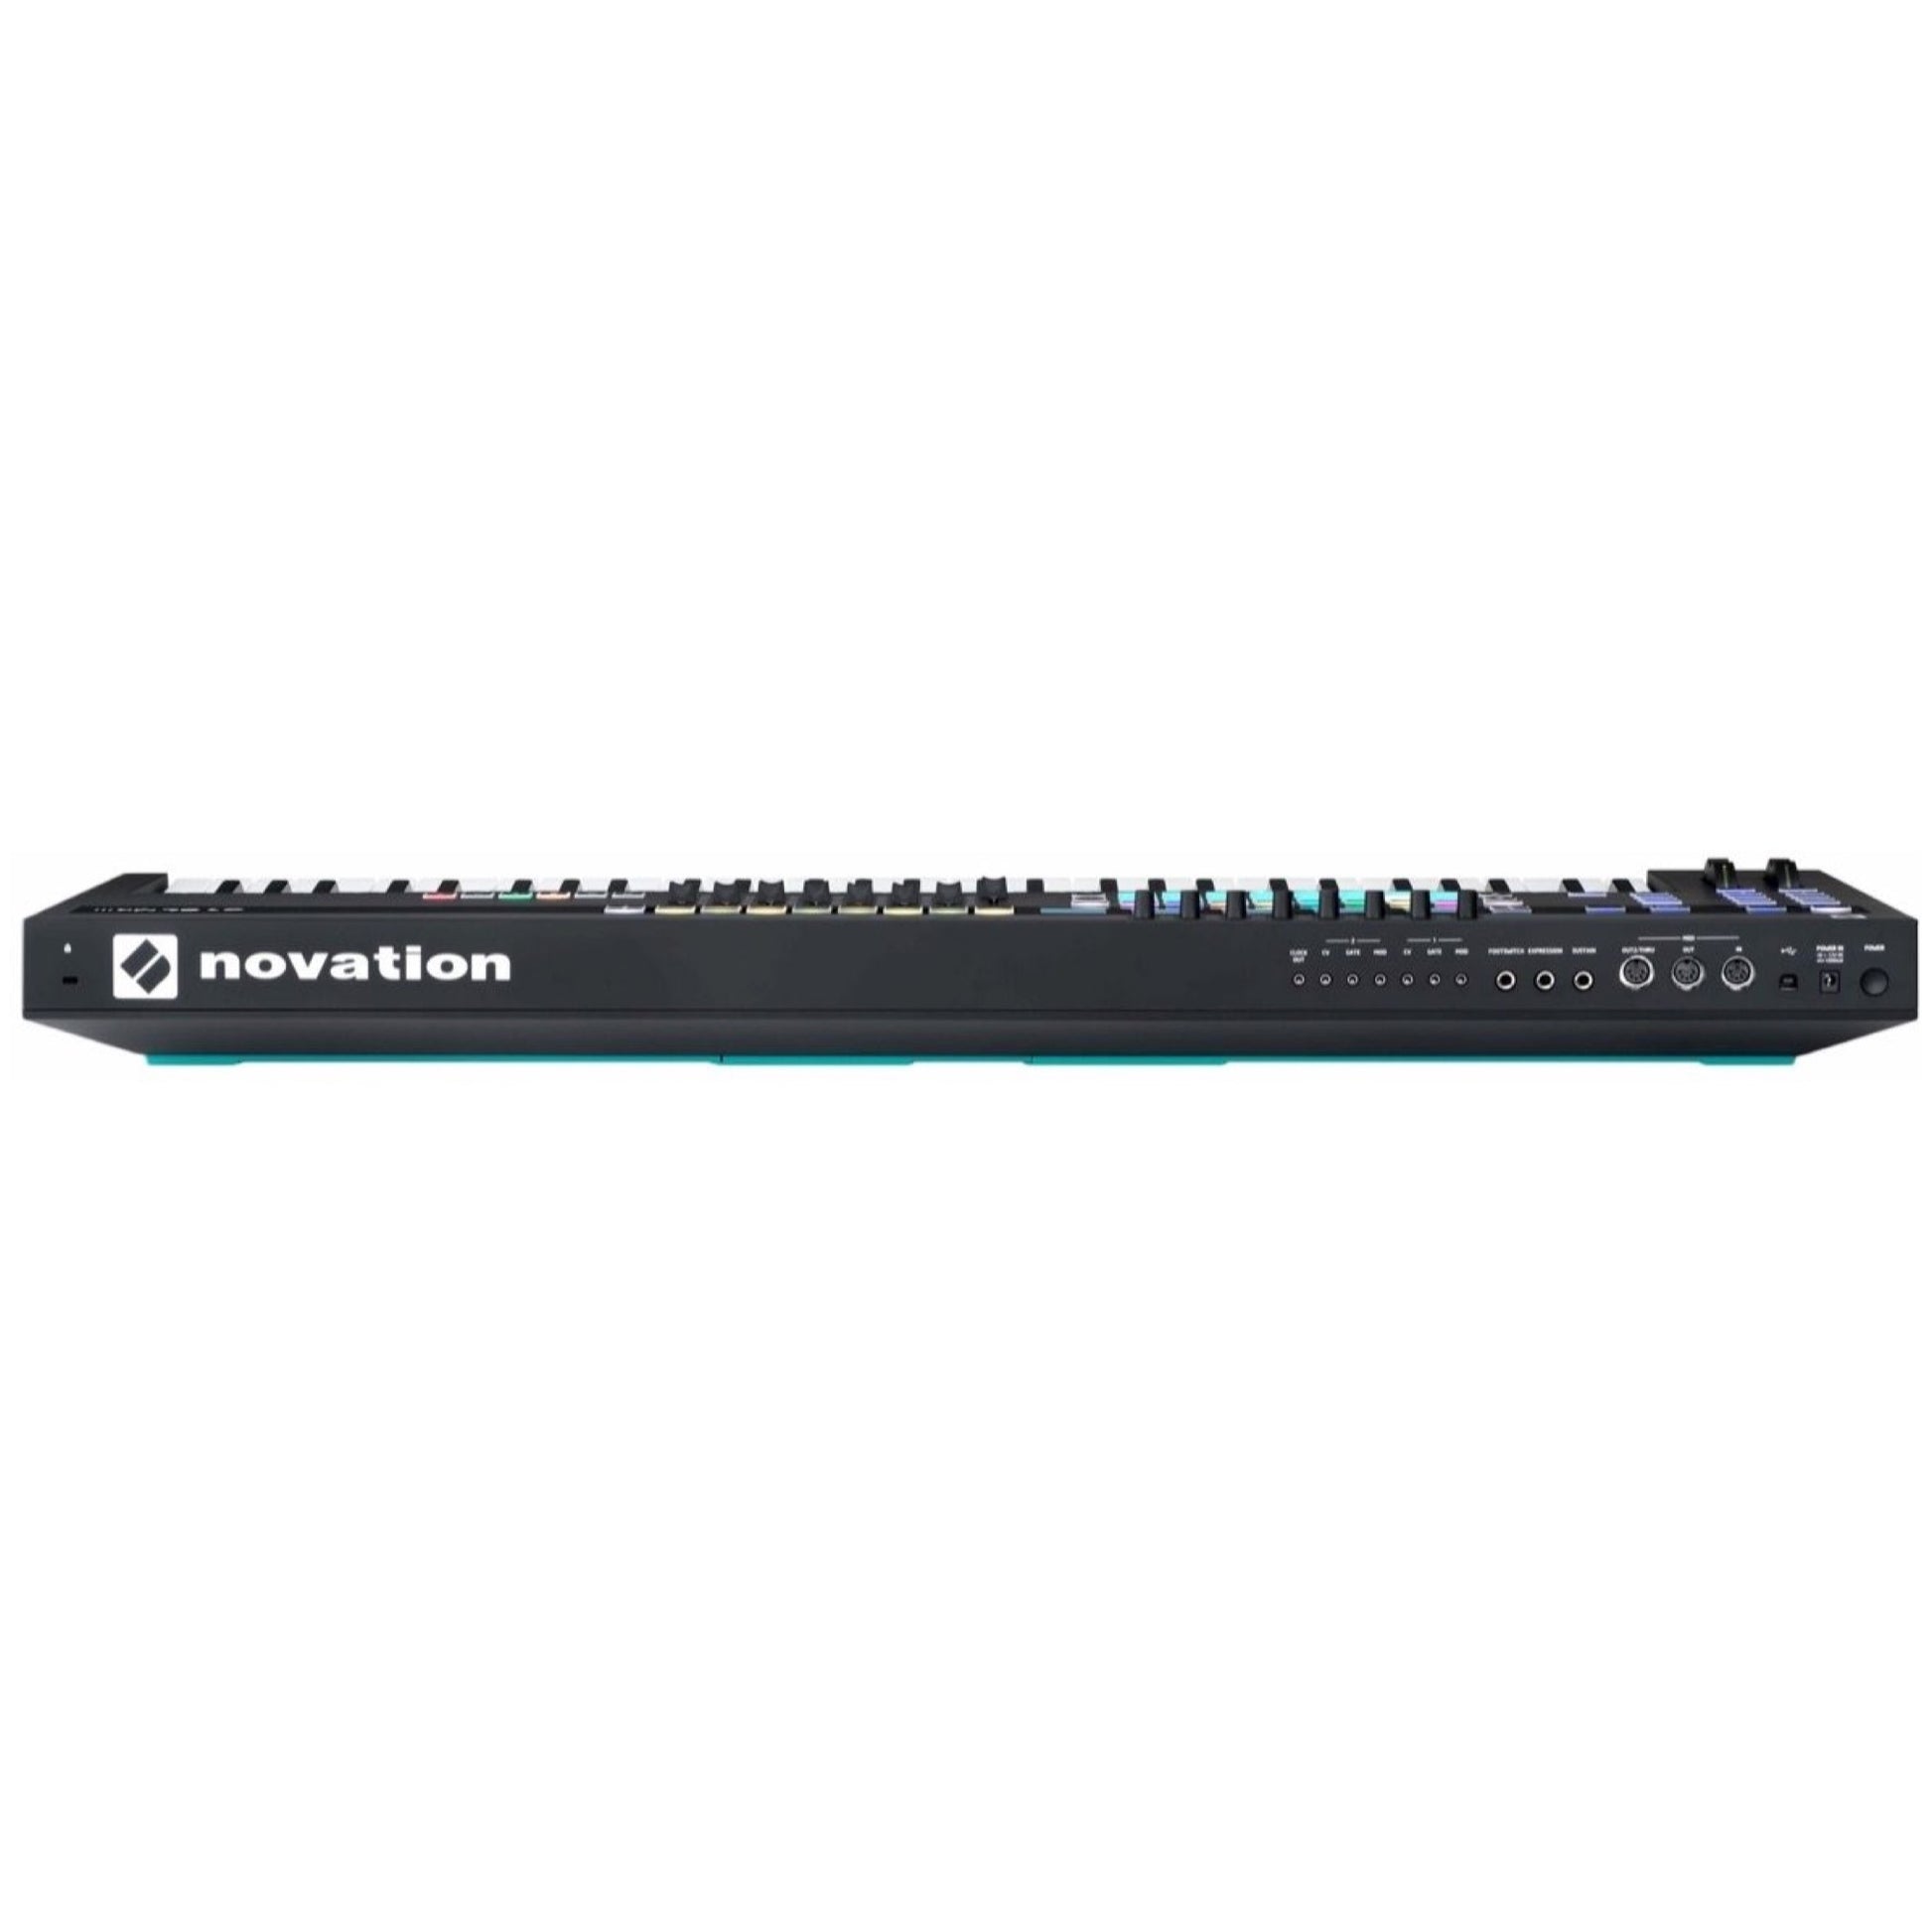 Novation 49 SL MK3 USB MIDI Keyboard Controller, 49-Key